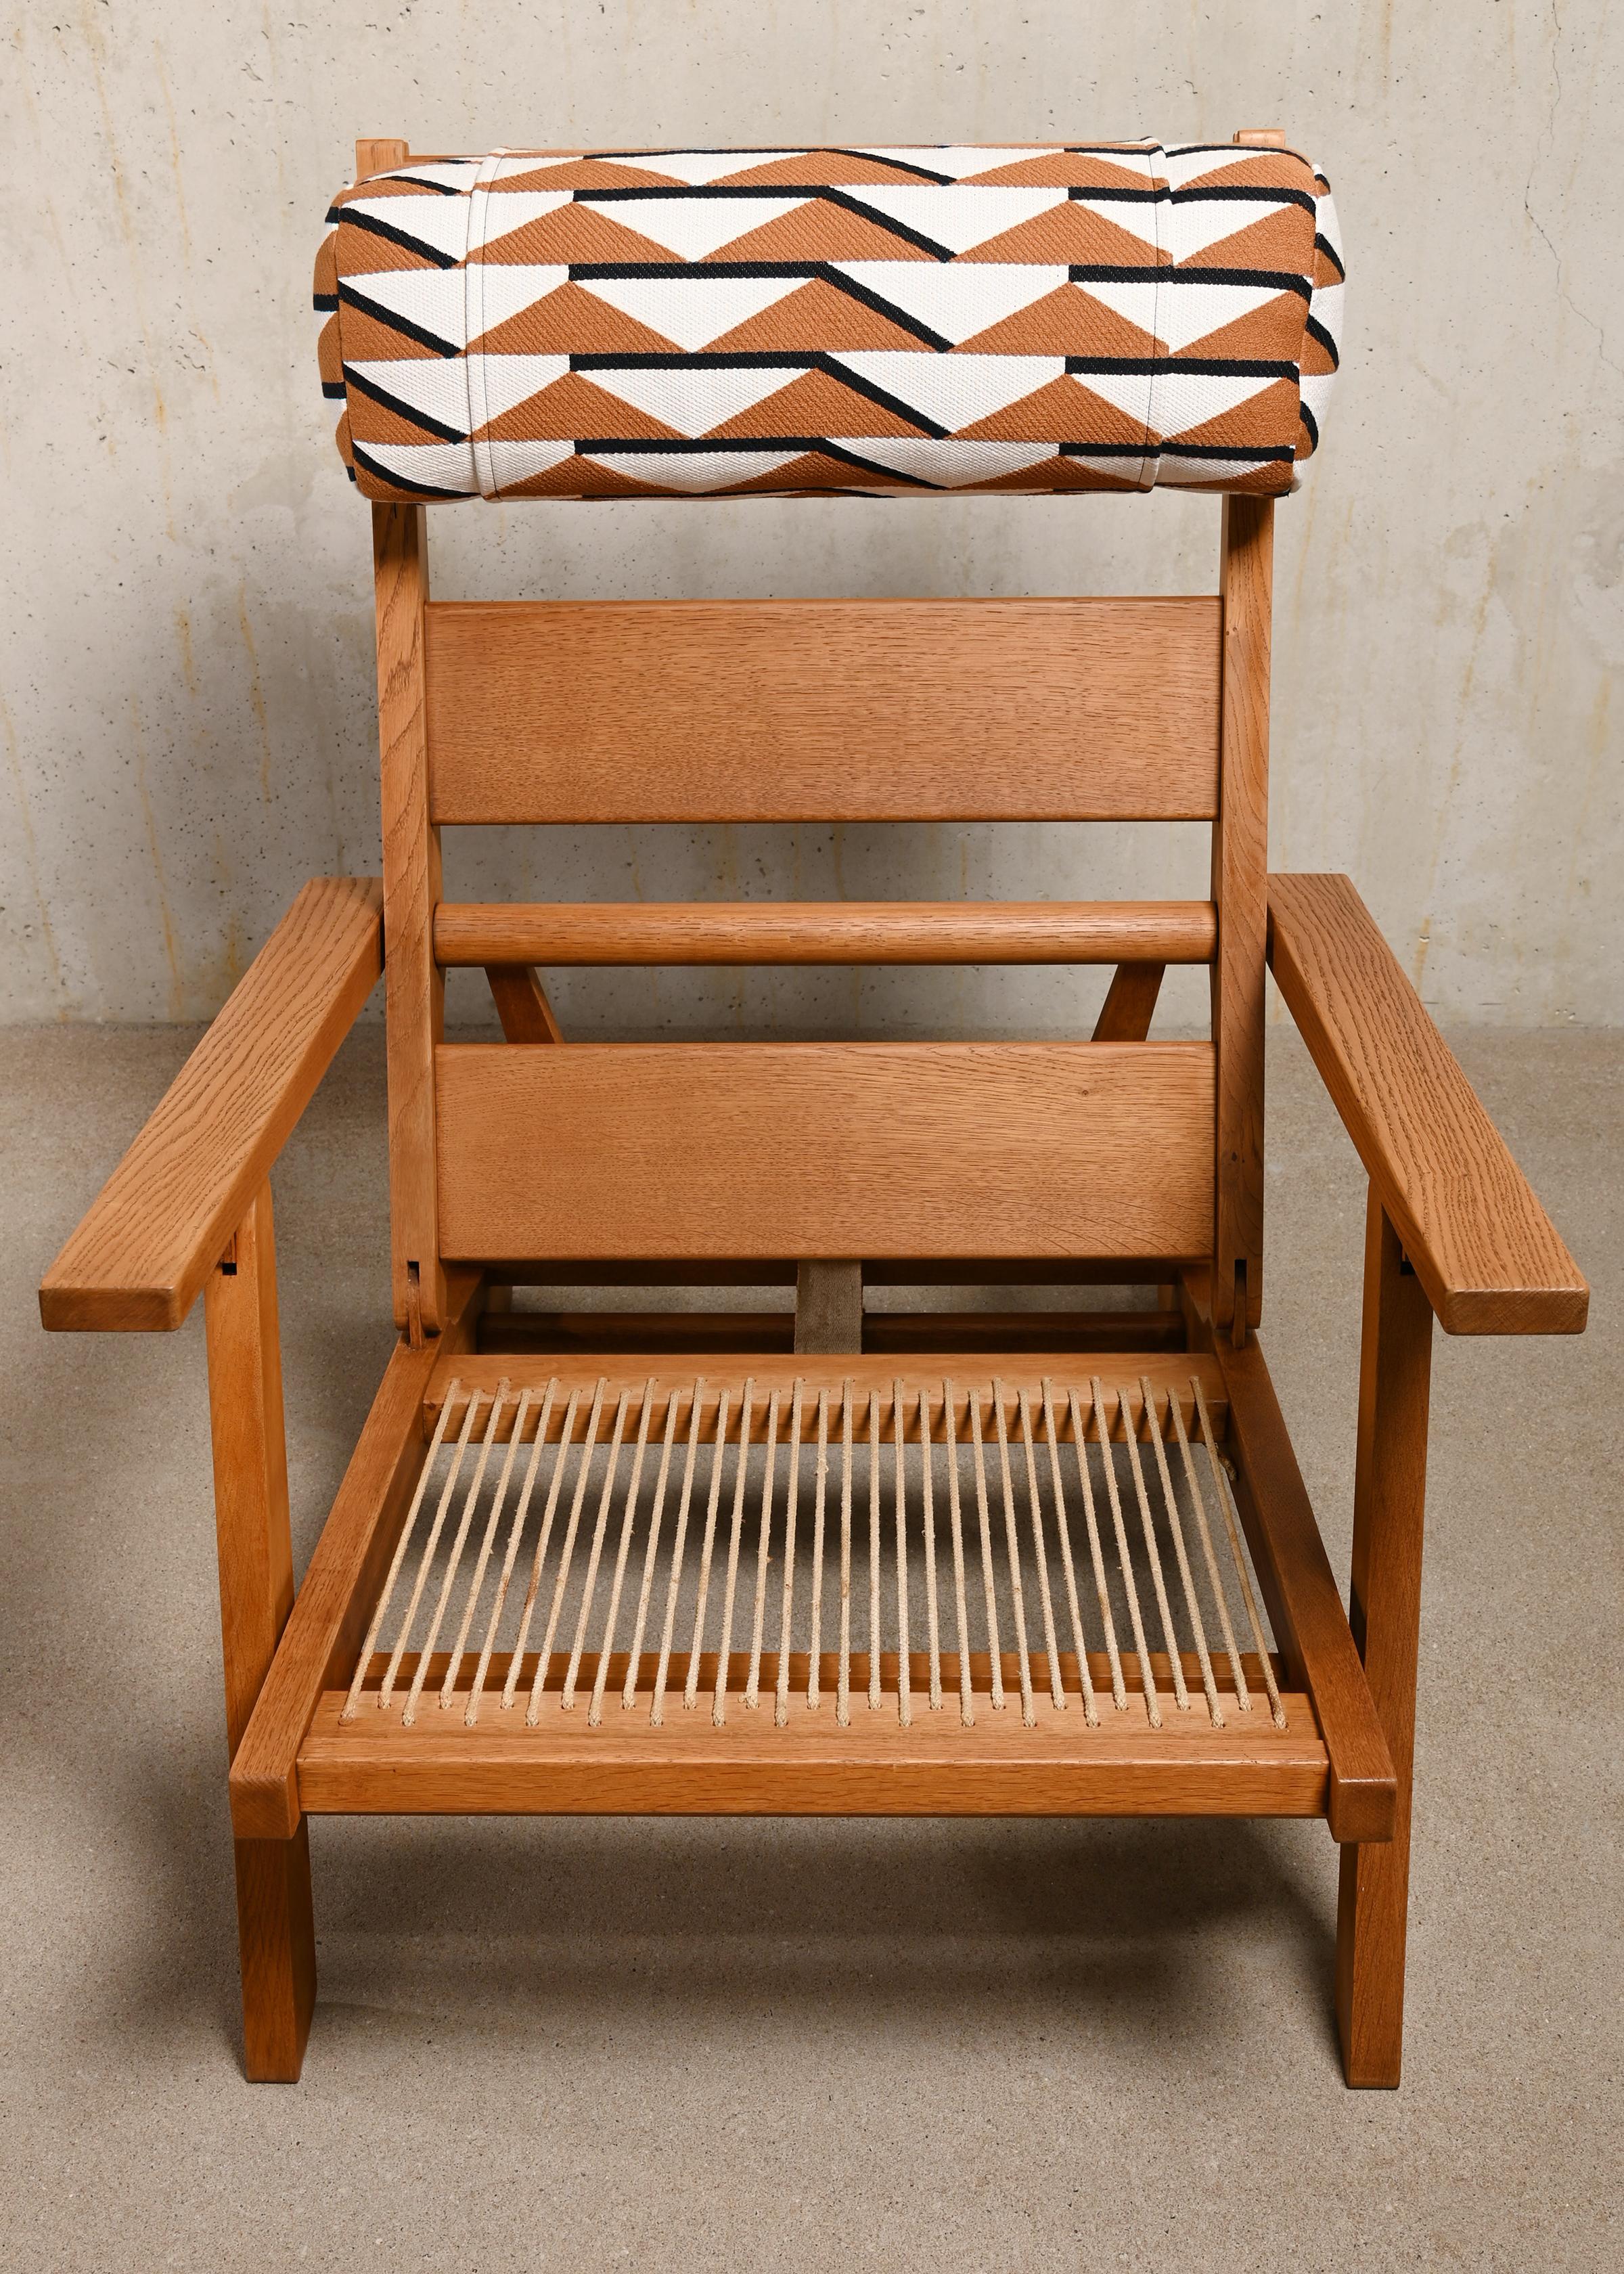 Hans J. Wegner Lounge Chair AP 72 in Oak and Pierre Frey fabric for AP Stolen 9